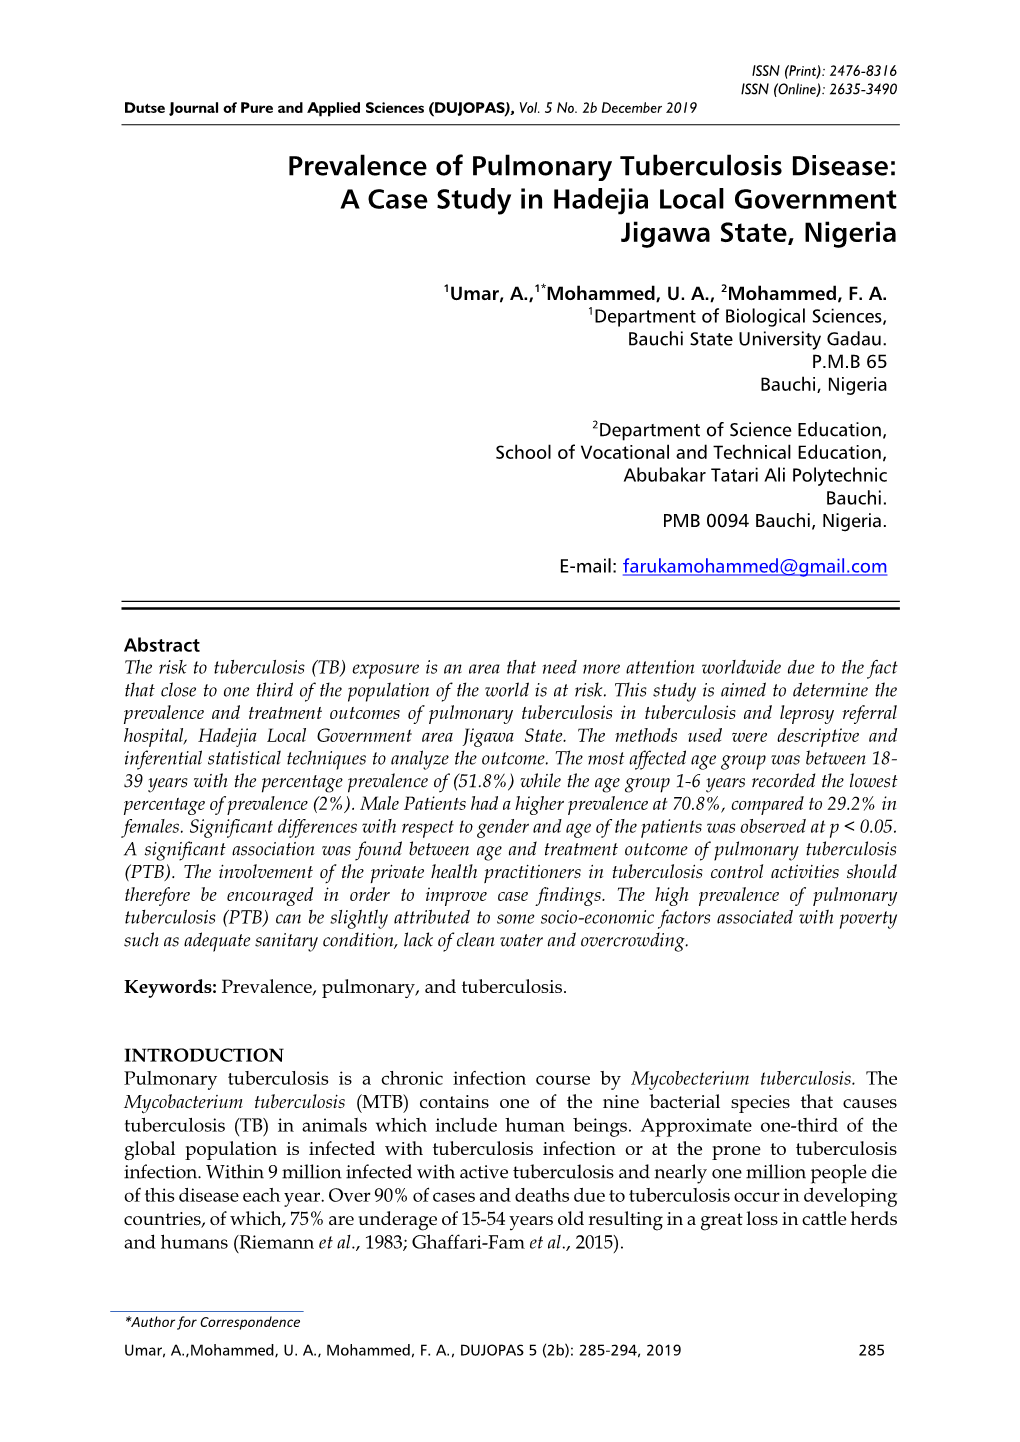 A Case Study in Hadejia Local Government Jigawa State, Nigeria